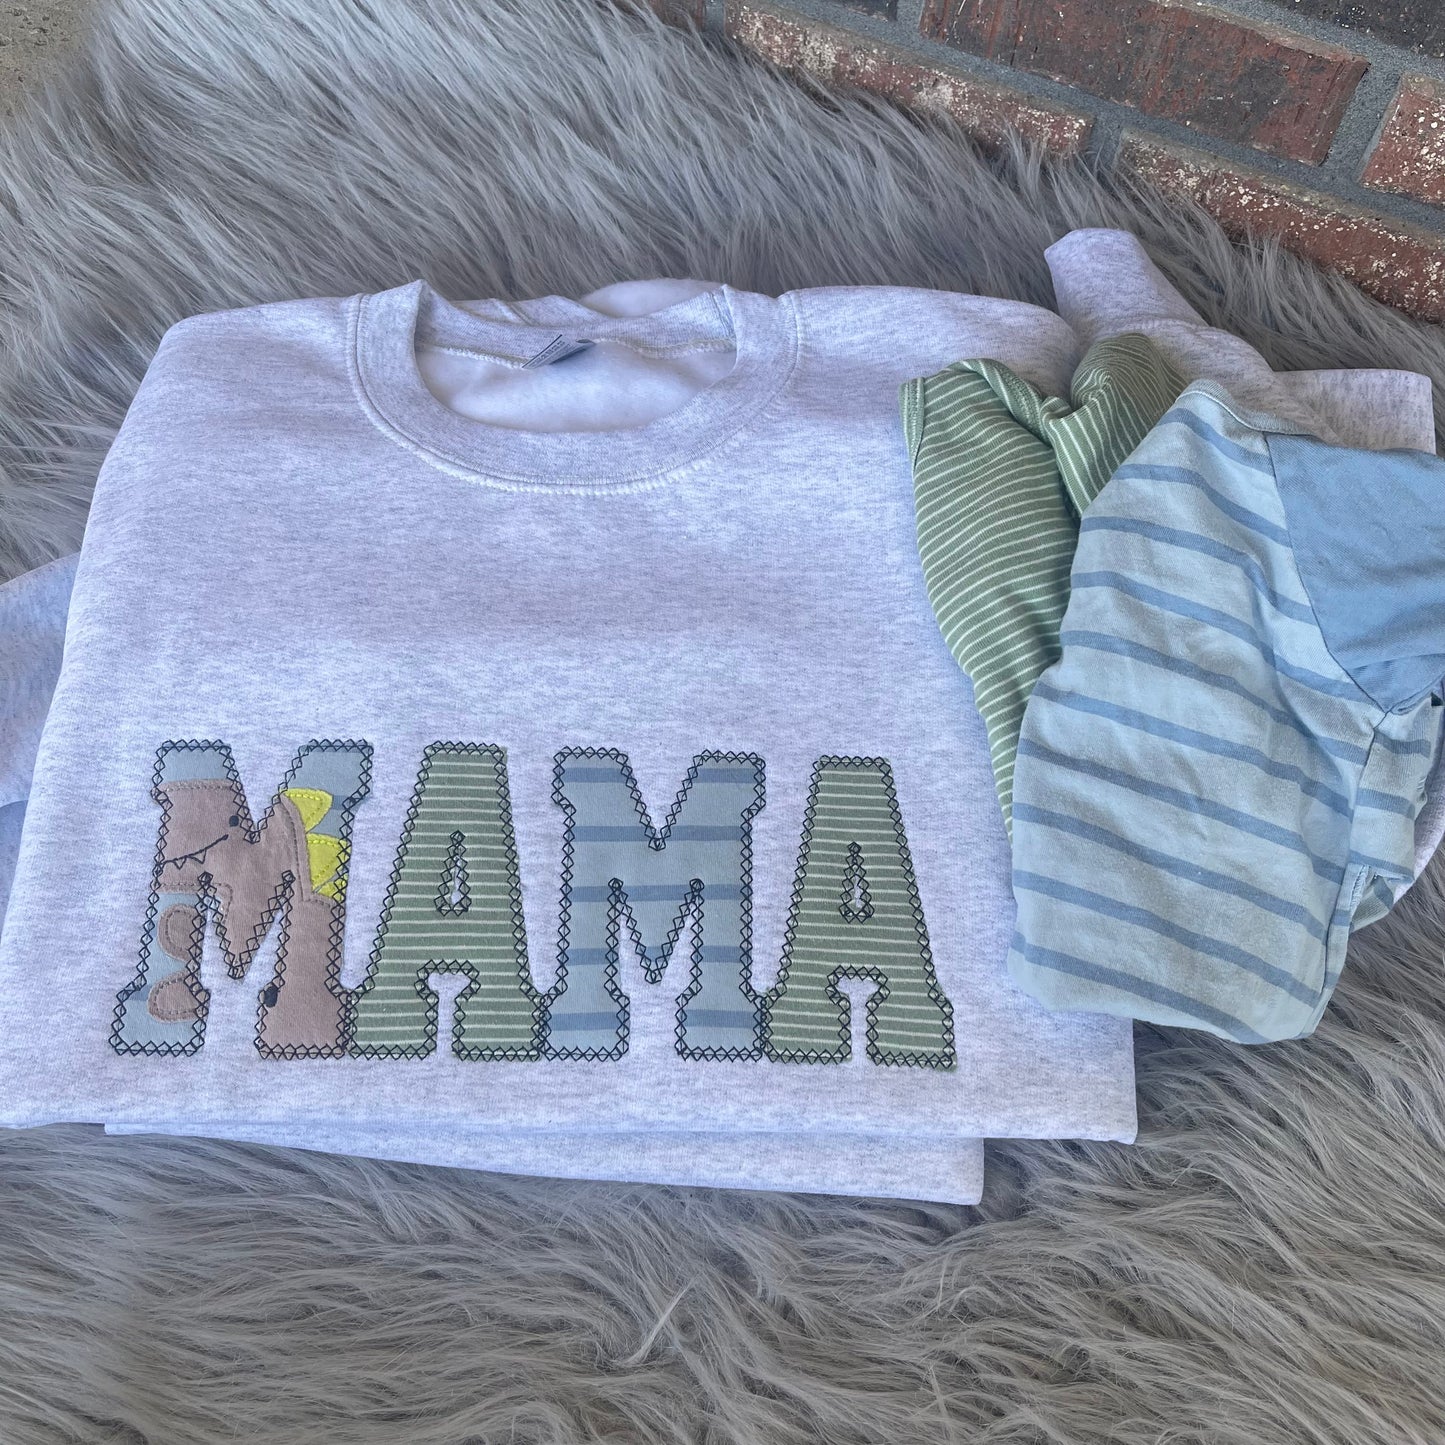 Baby clothes Mama Sweatshirt